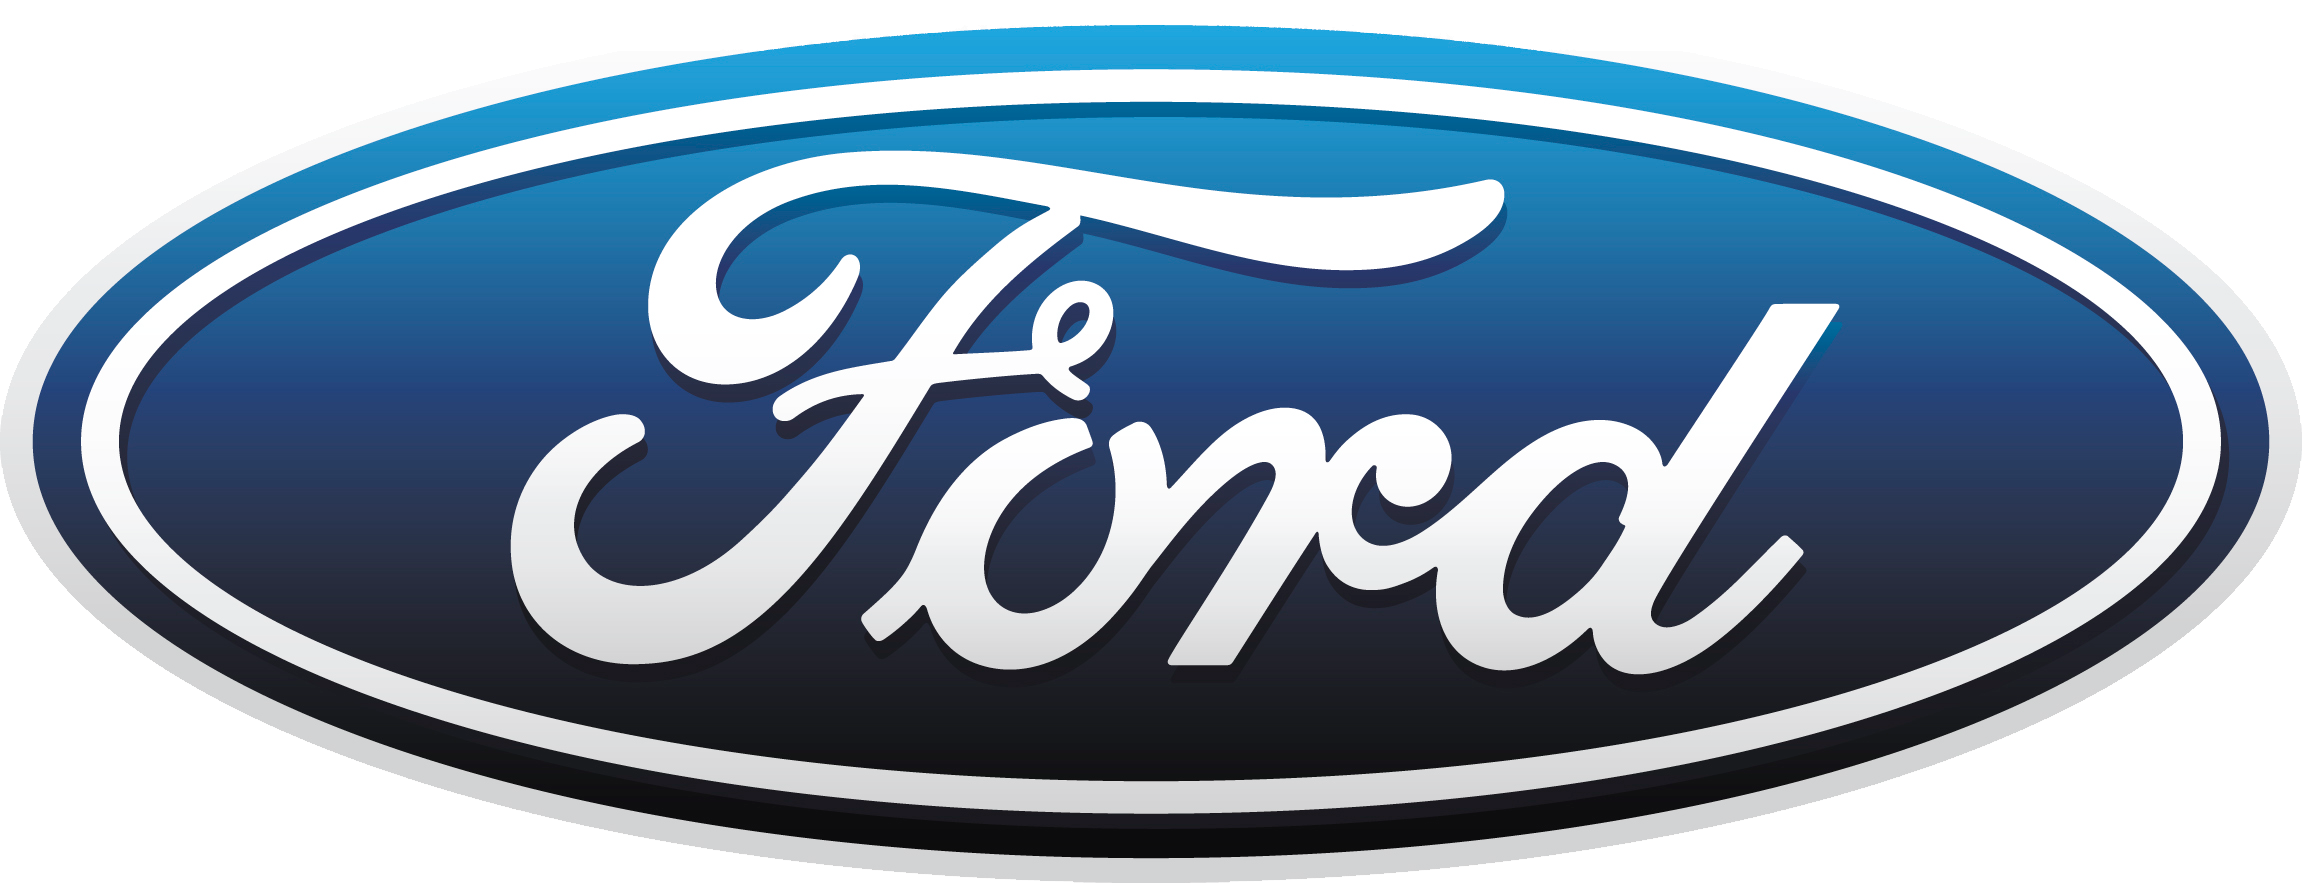 Car Company Ford Photos Motor Logo Brand Clipart